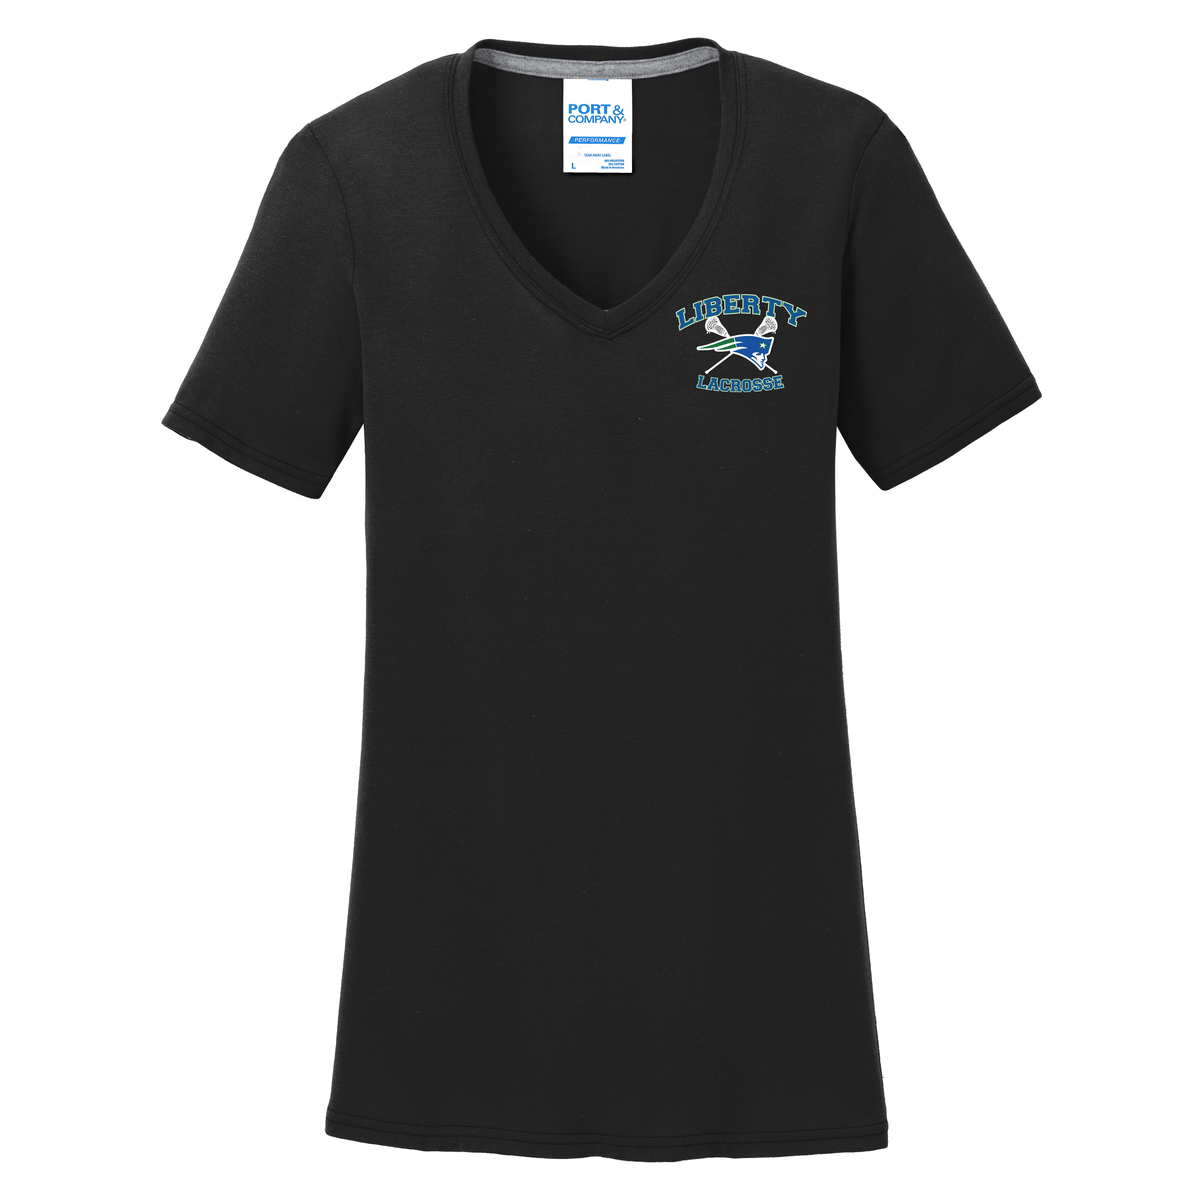 Liberty Lacrosse Women's T-Shirt